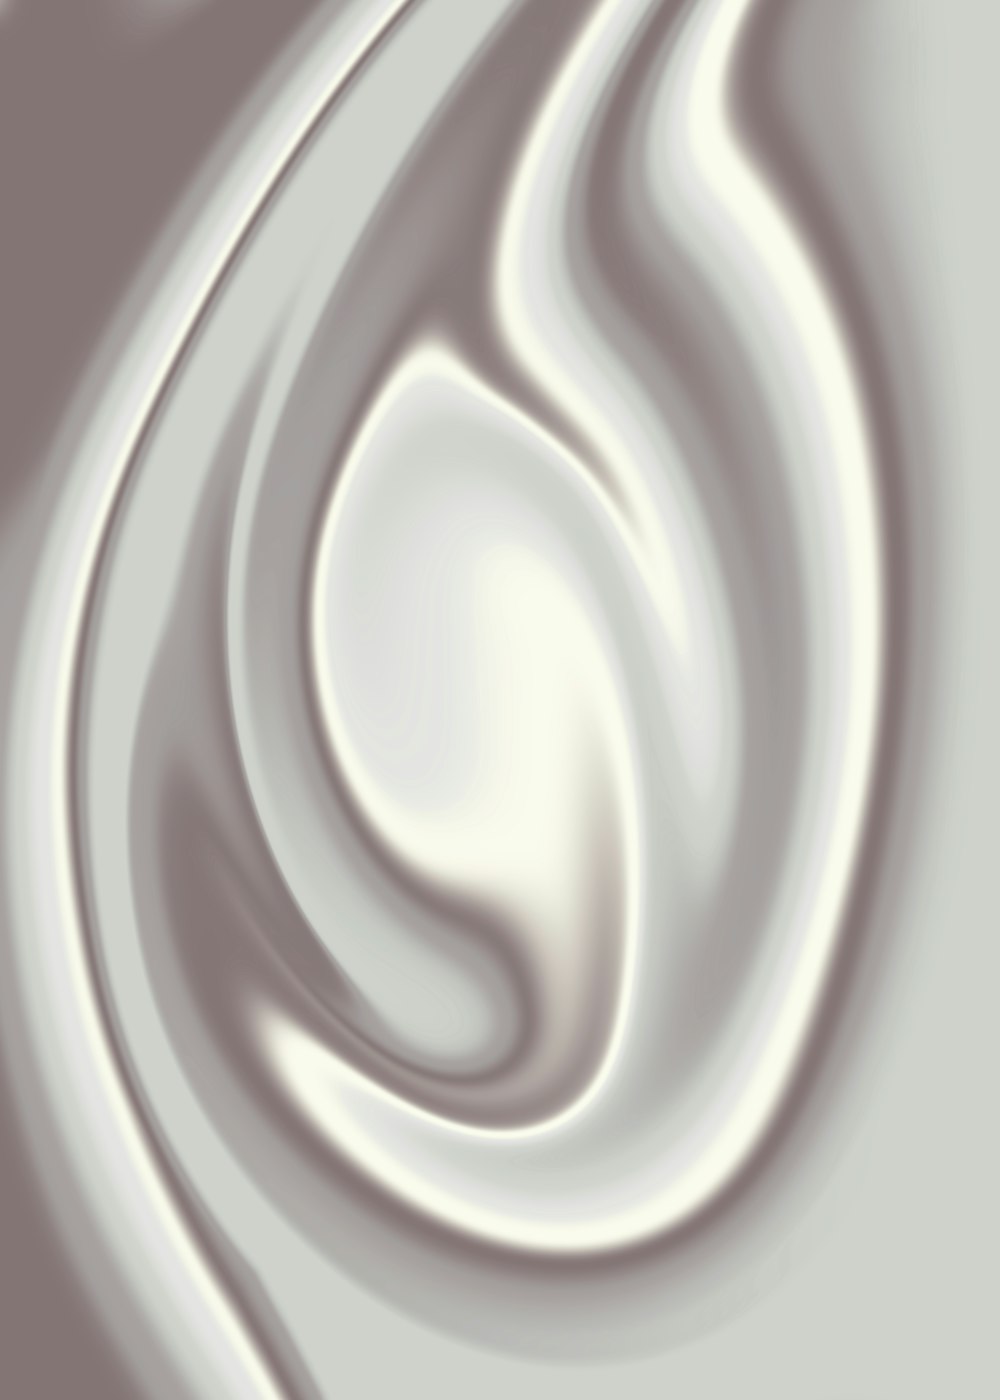 a white circular object